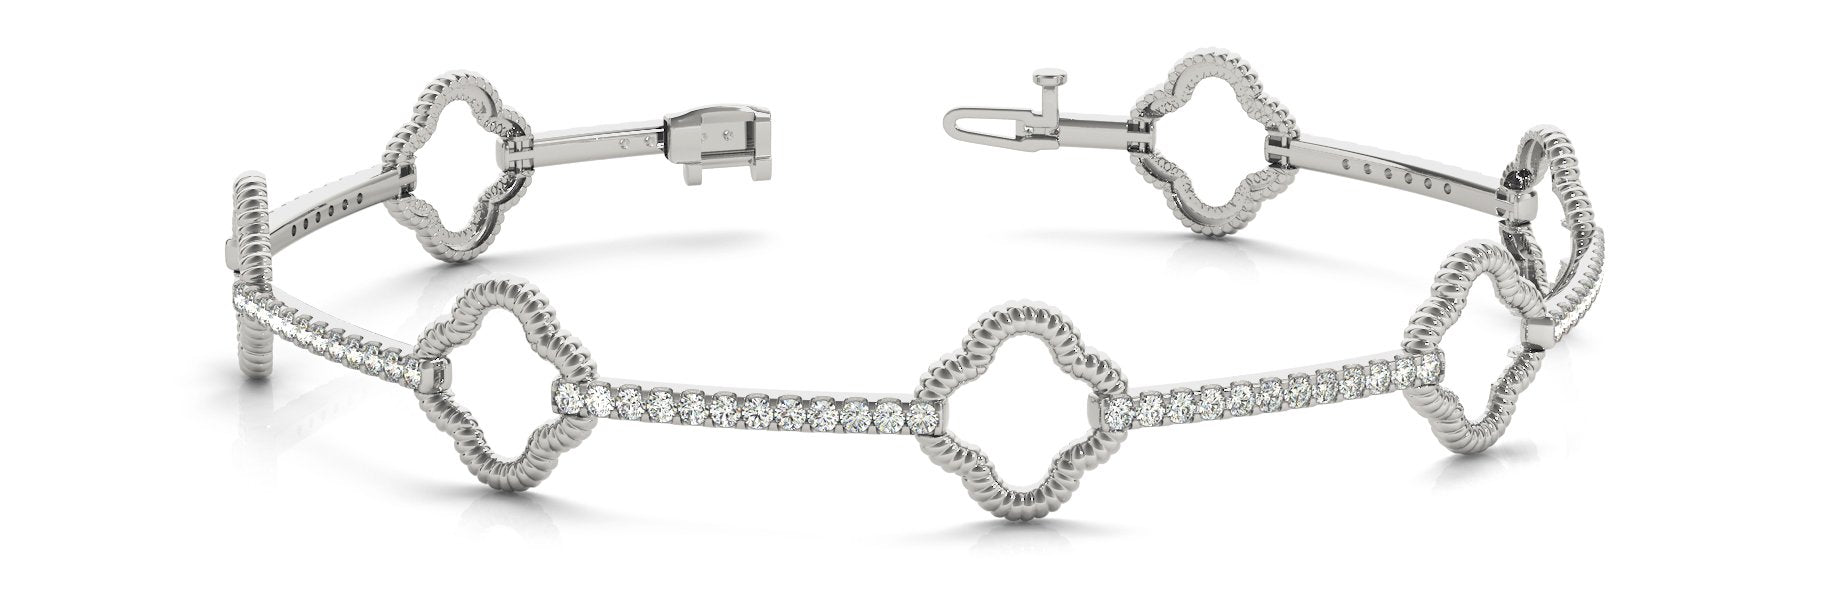 Fancy Diamond Bracelet Ladies 1.09ct tw - 14kt White Gold